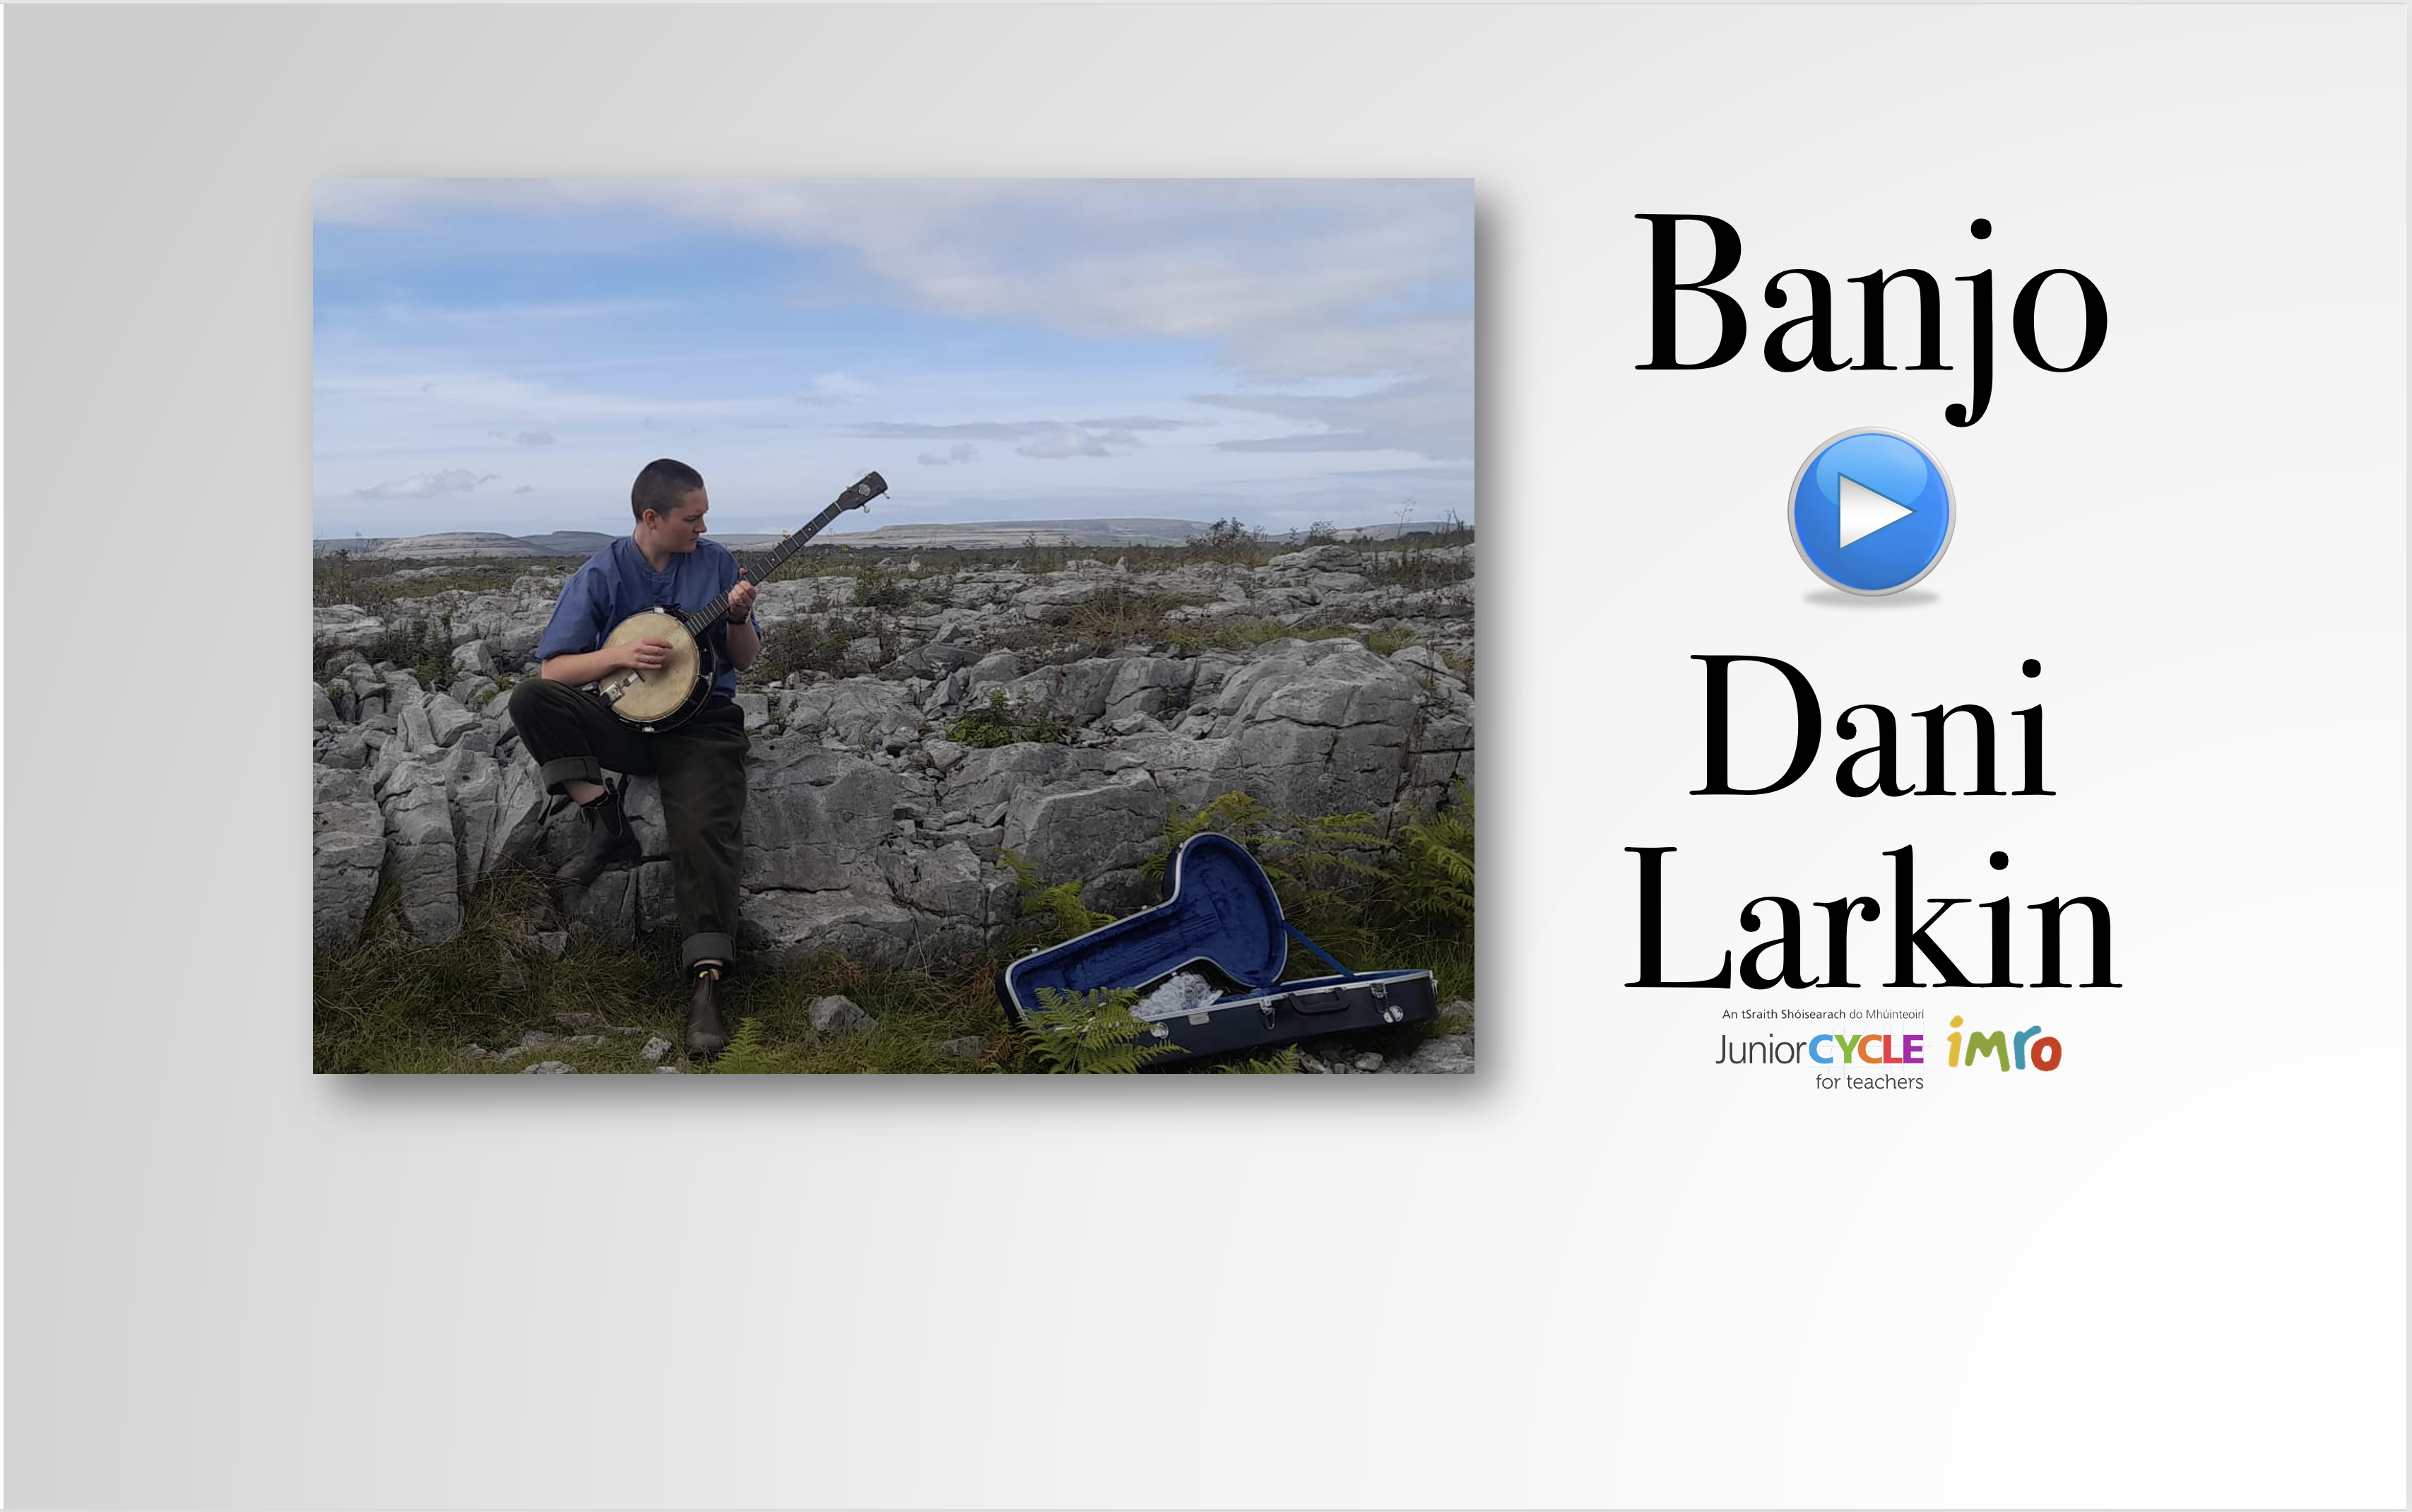 Meet the Banjo